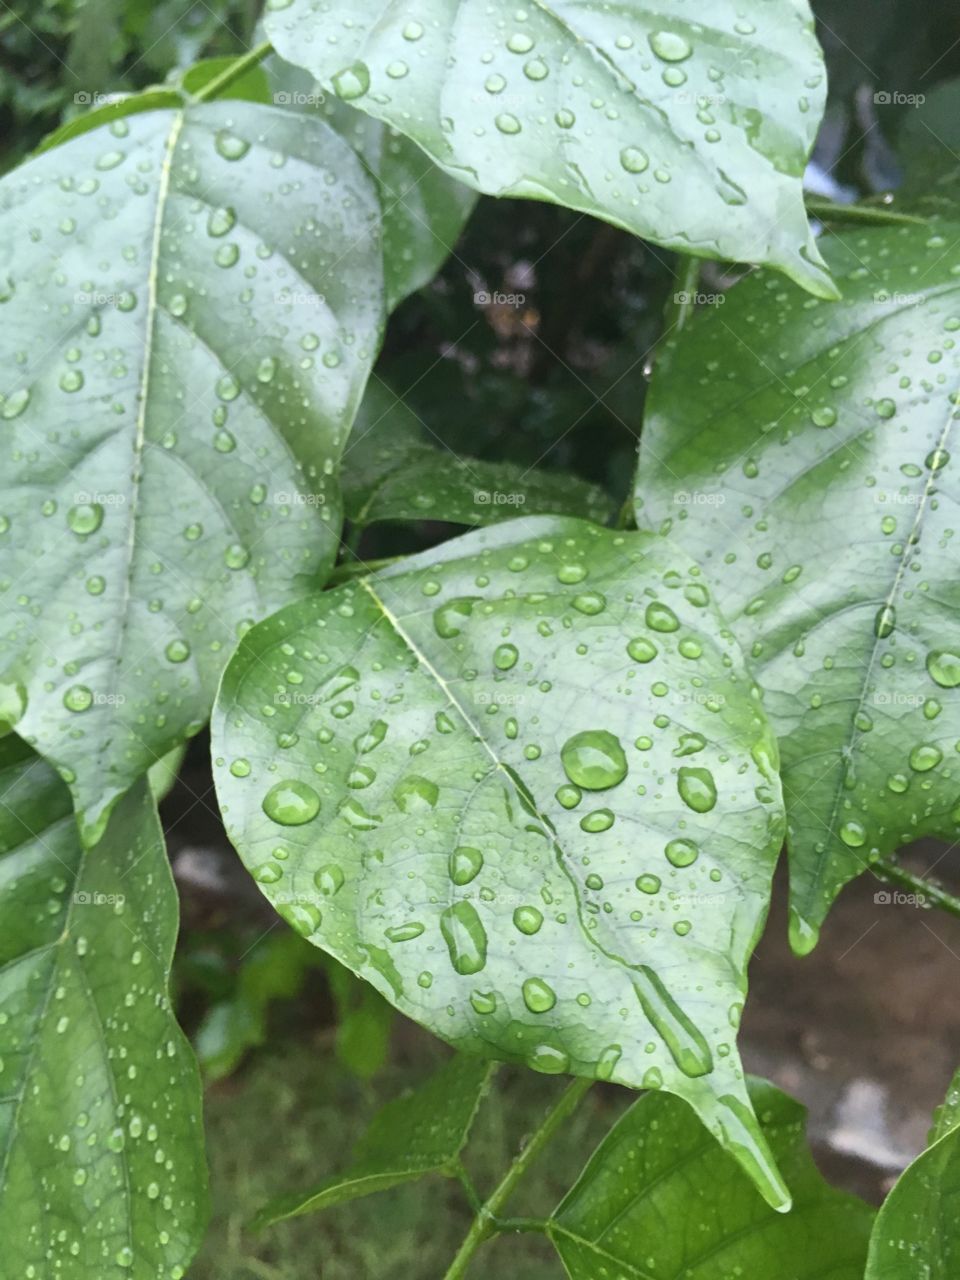 Rain ☔️ drops 💦 on leaves 🍃 